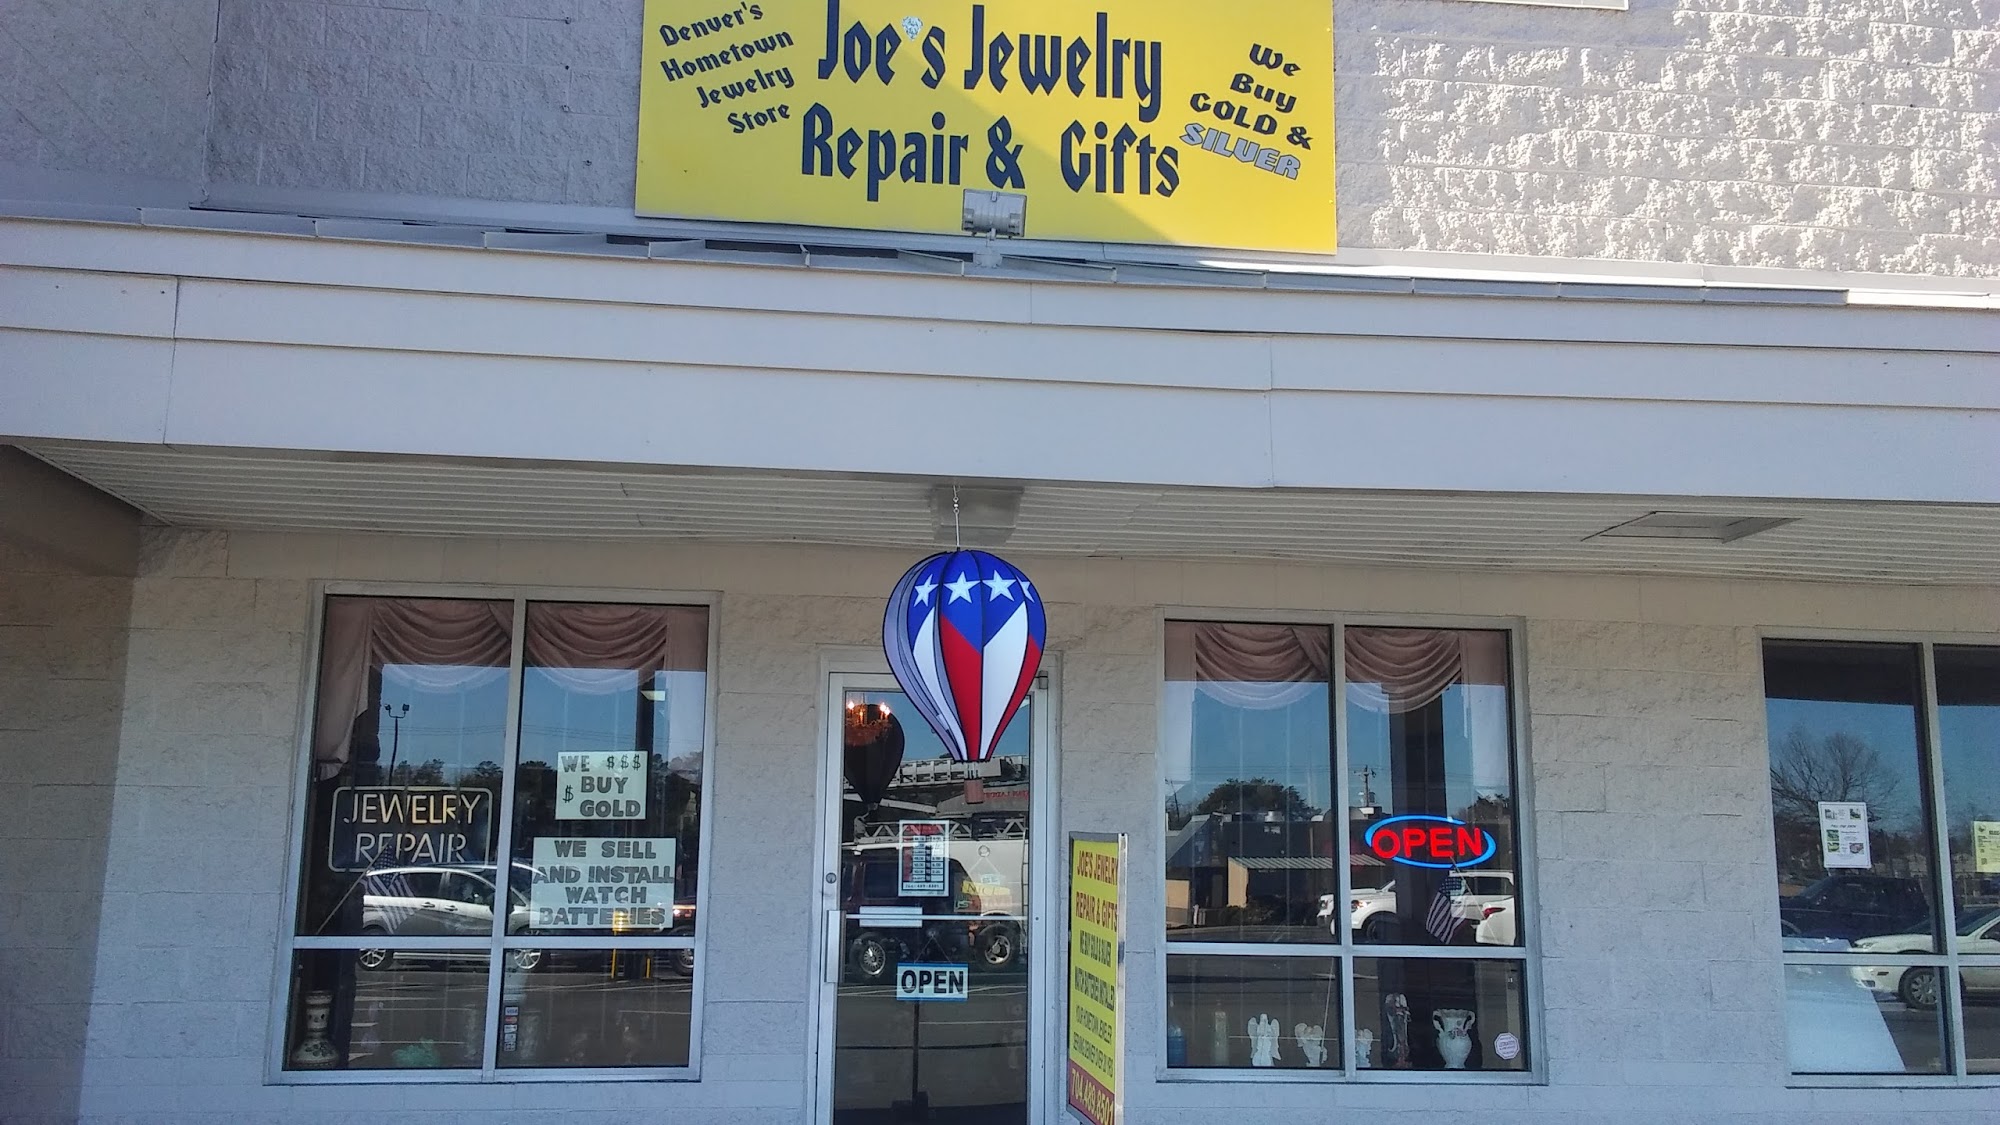 Joe's Jewelry & Gifts